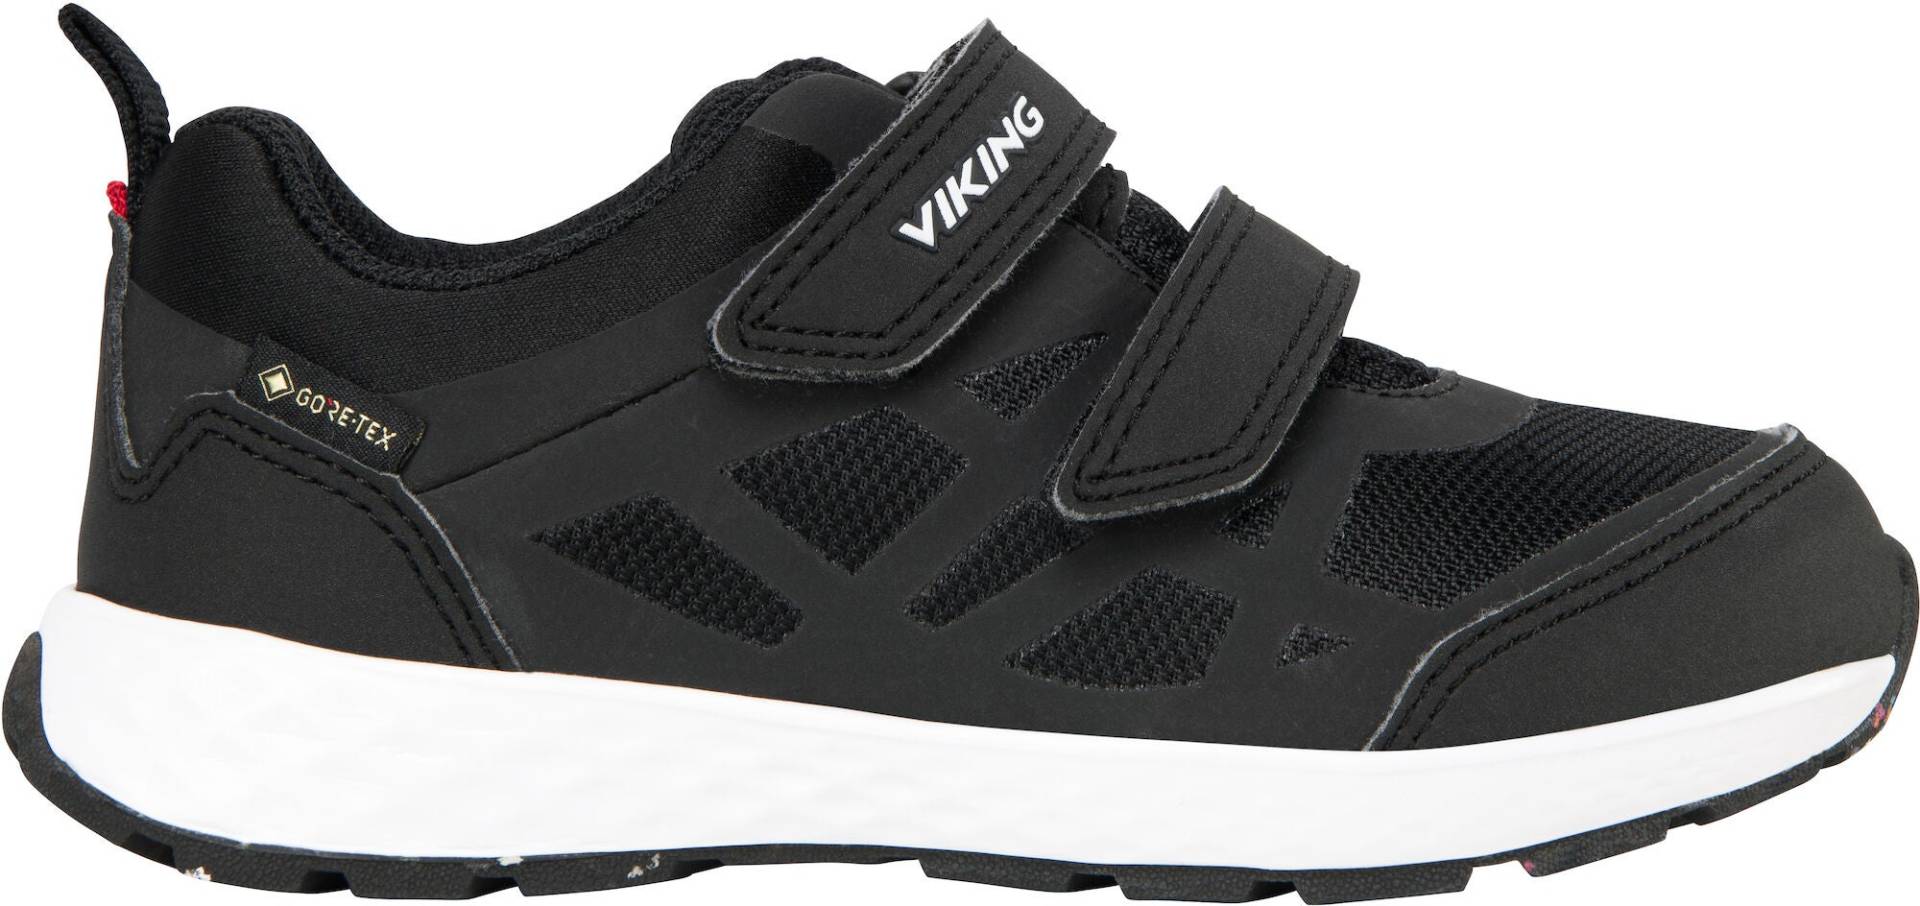 Viking Veme Reflex 2V GTX Kinder Sneakers, Black, 30, Kinderschuhe von Viking